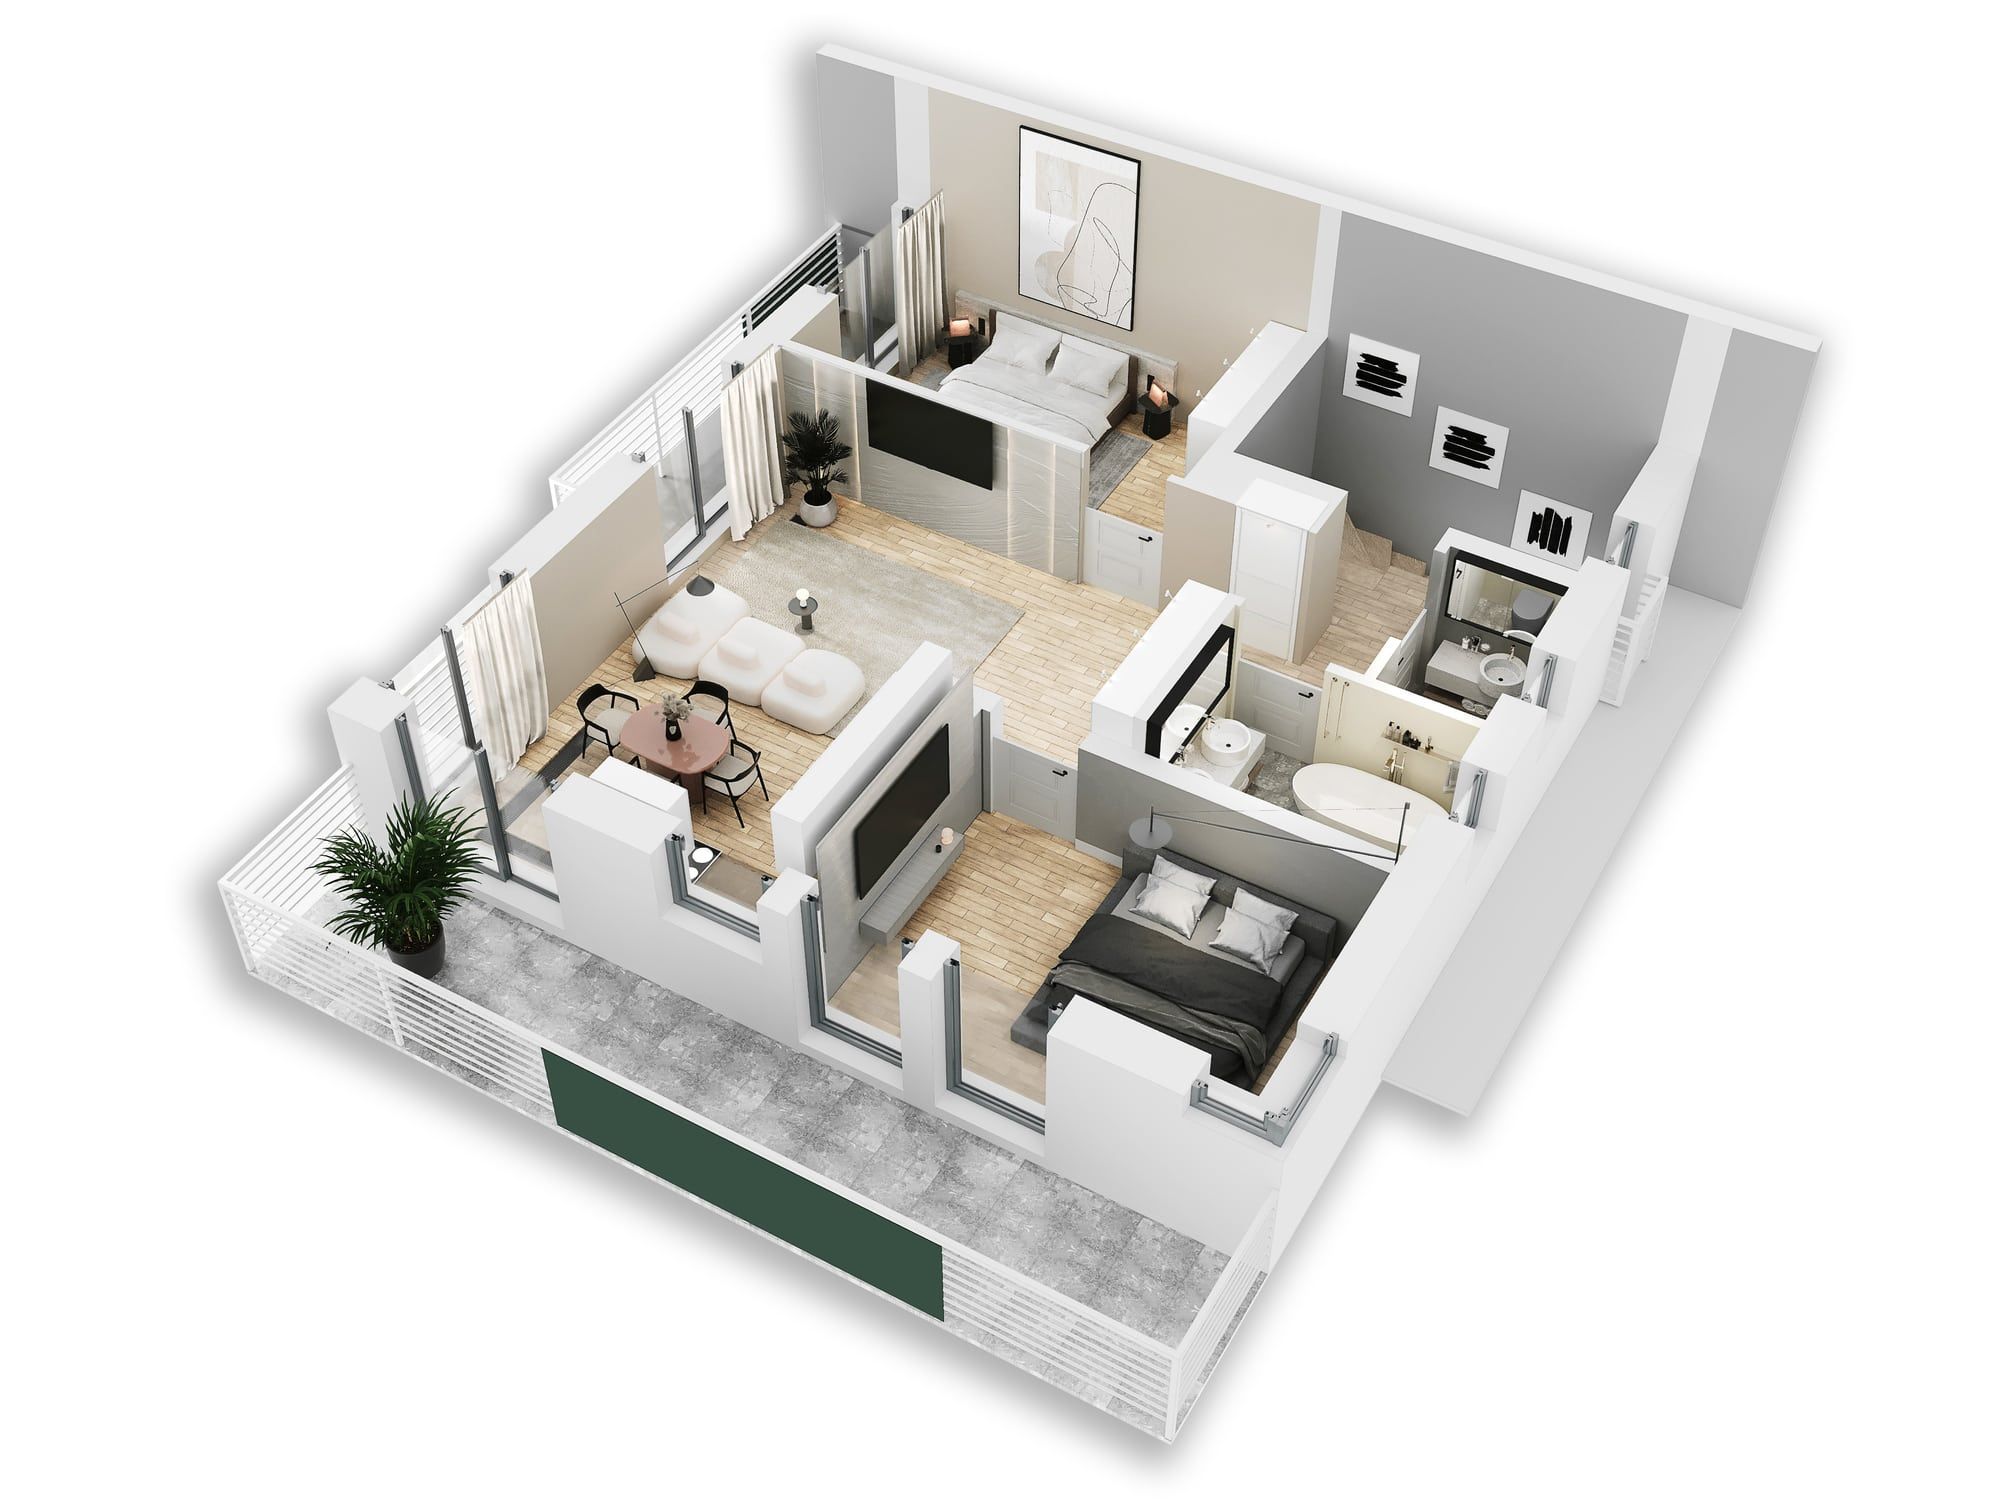 3D Floor Plan: Apartment, Commercial Unit, House - Price & Time